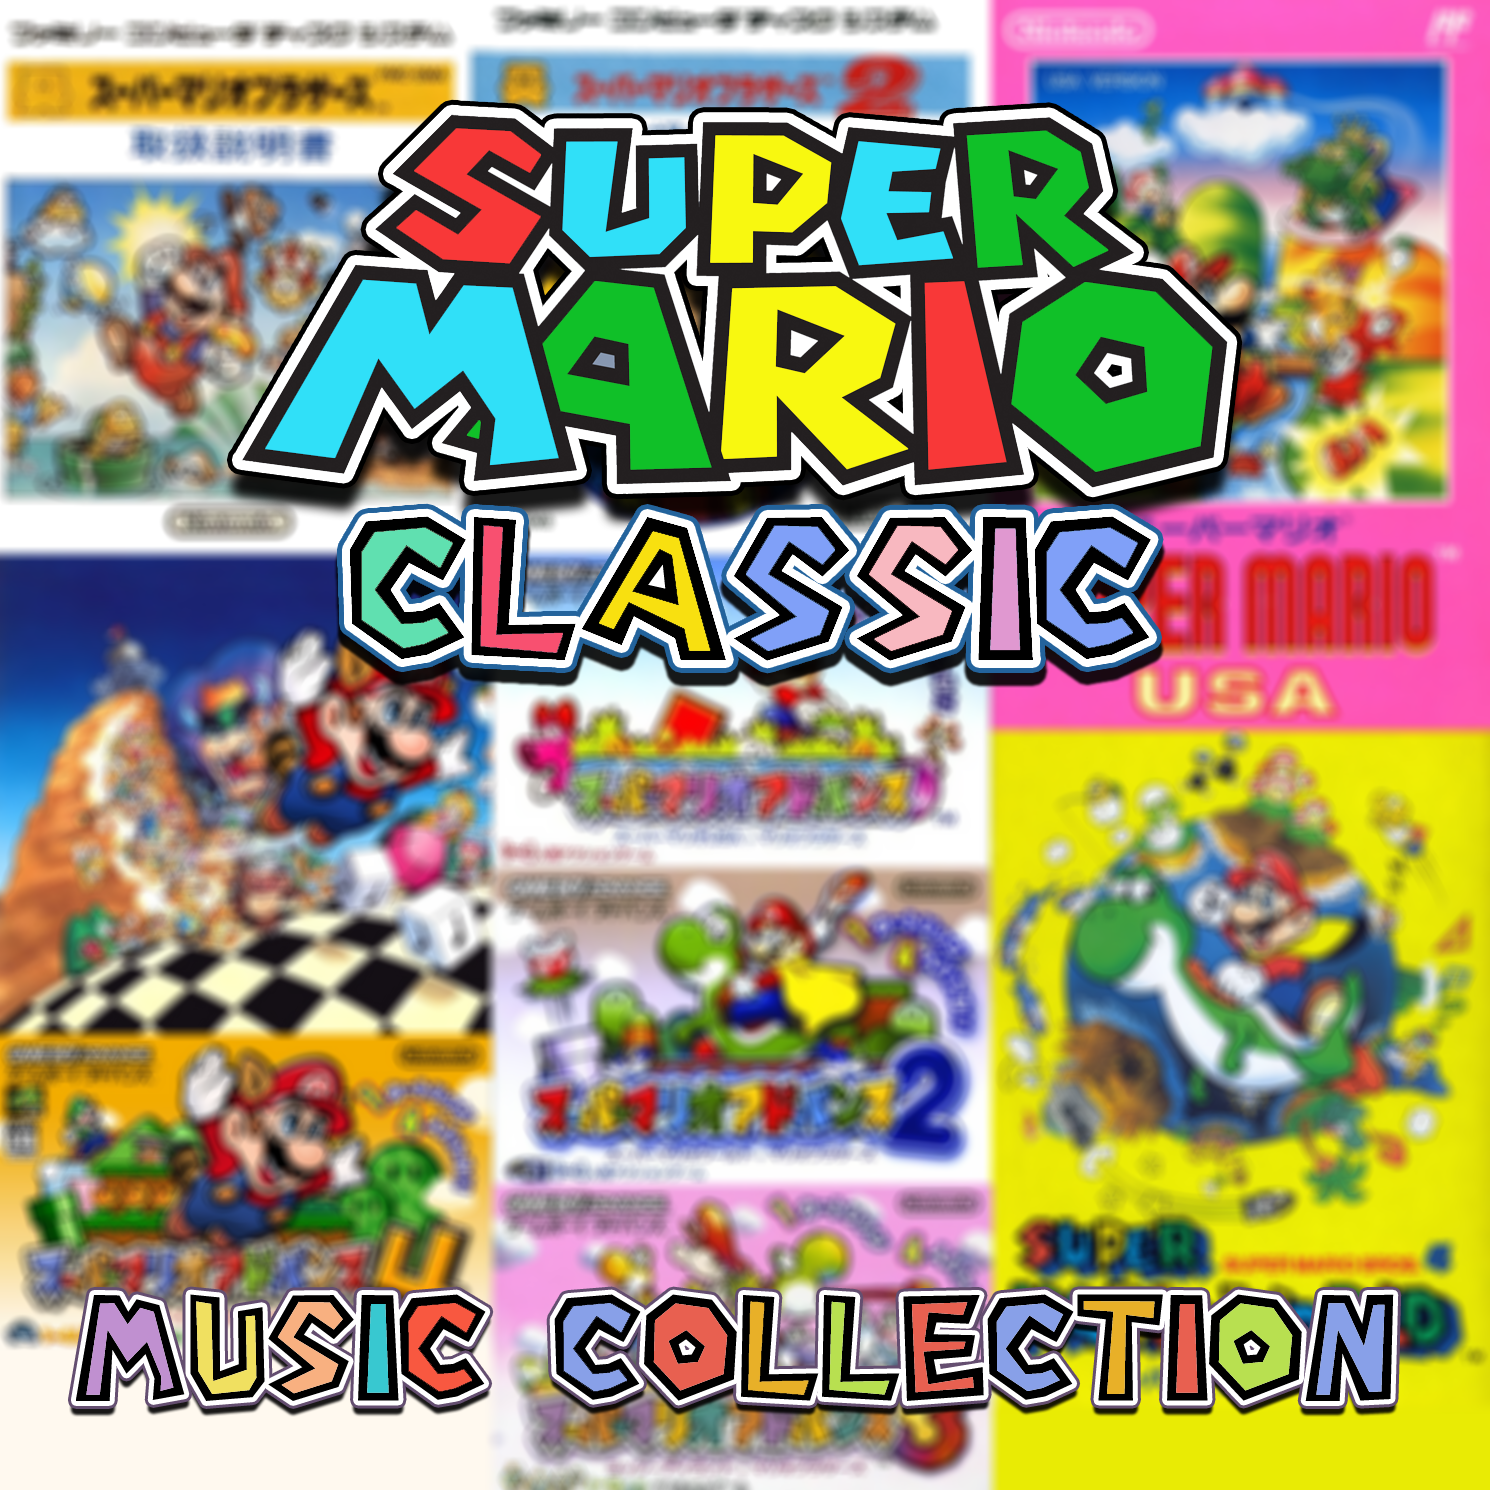 New Super Mario Bros. (DS, Wii U) (gamerip) (2006) MP3 - Download